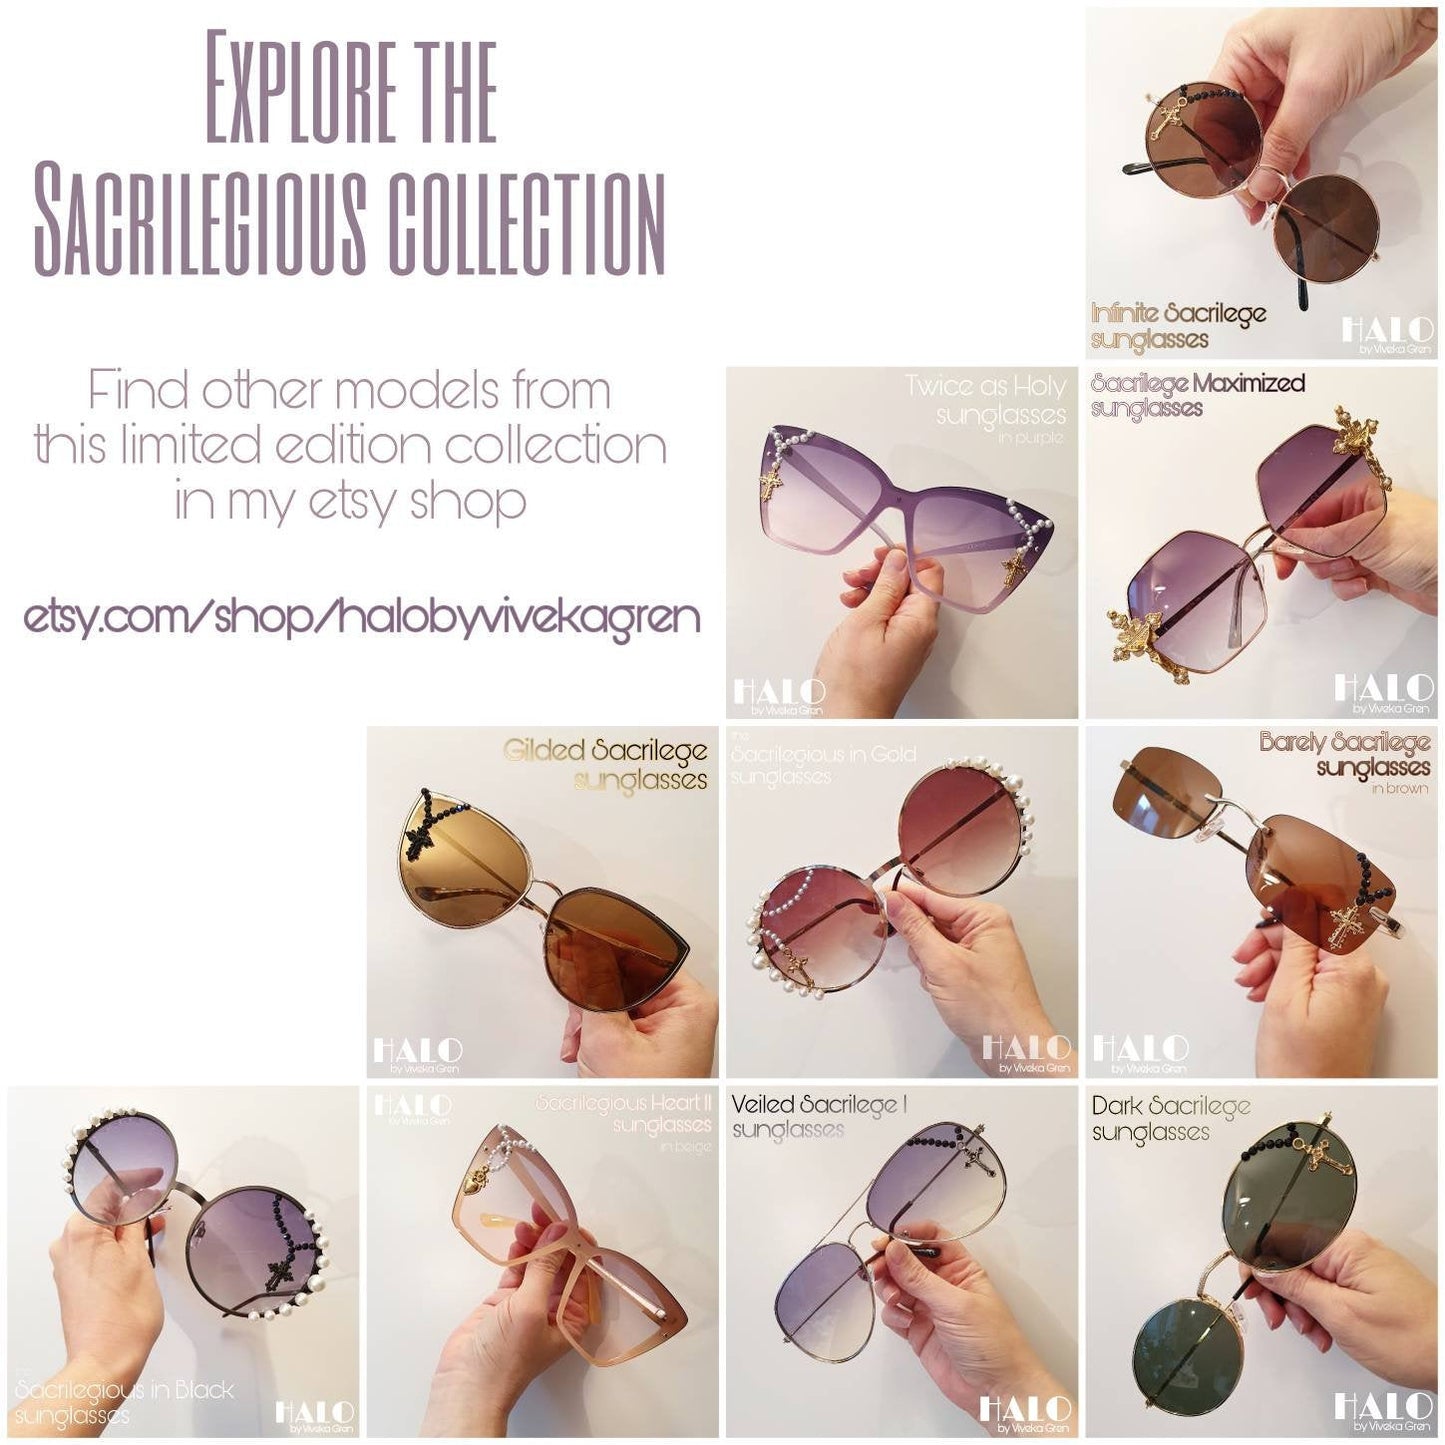 Sacrilegious Collection: The Veiled Sacrilege I Sunglasses, limited edition unisex pilot frames (small cross)